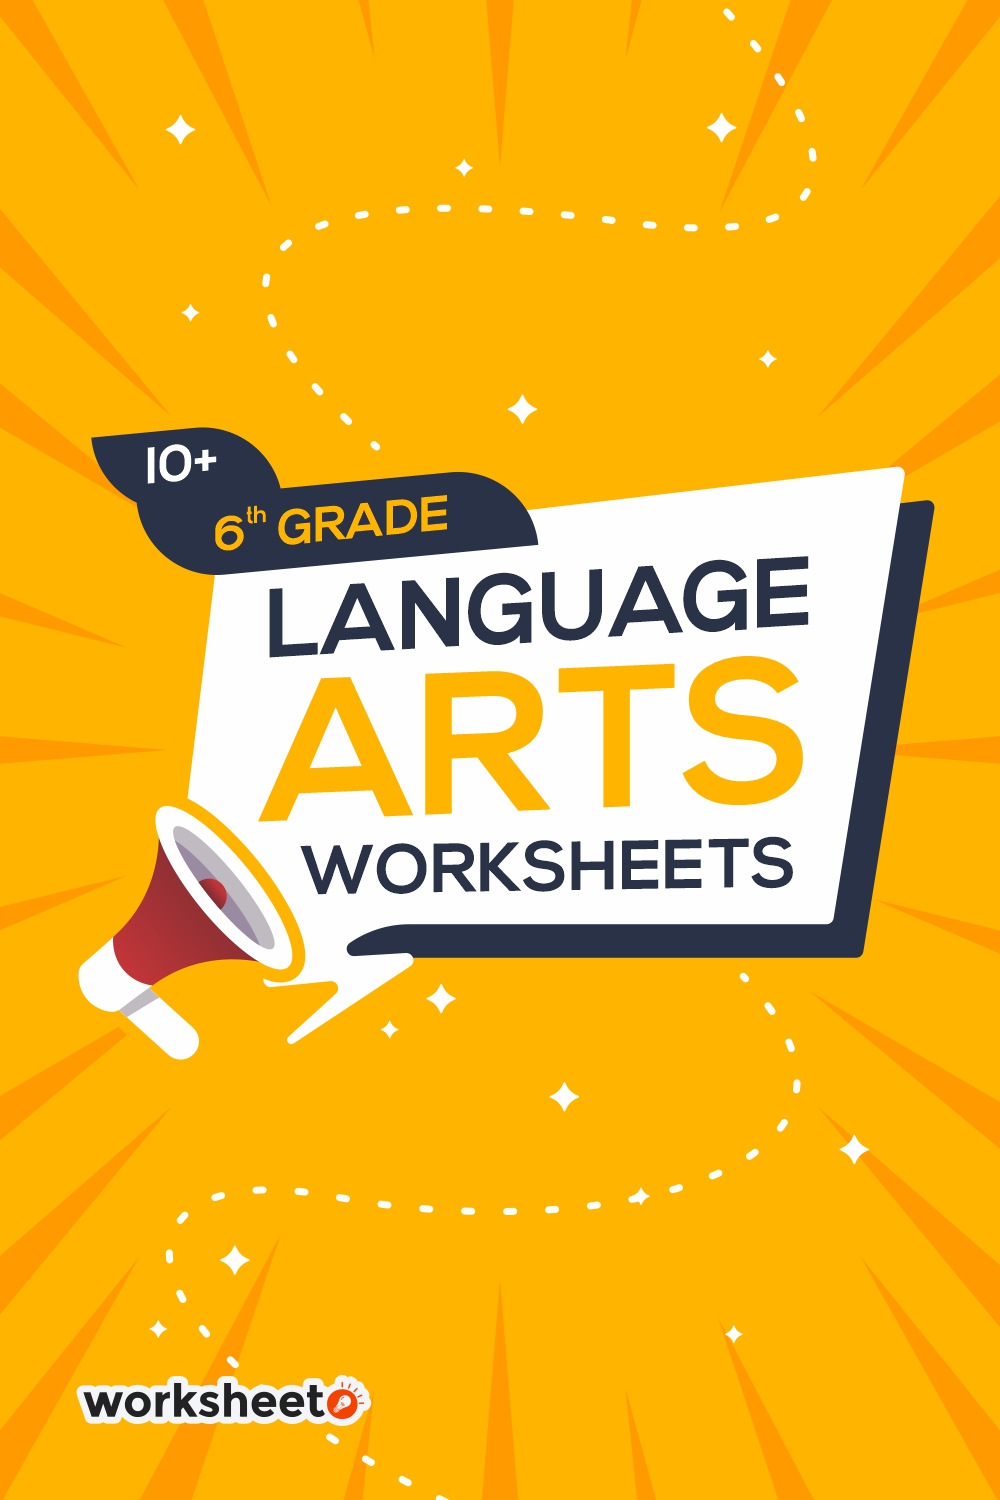 9 Images of 6th Grade Language Arts Worksheets